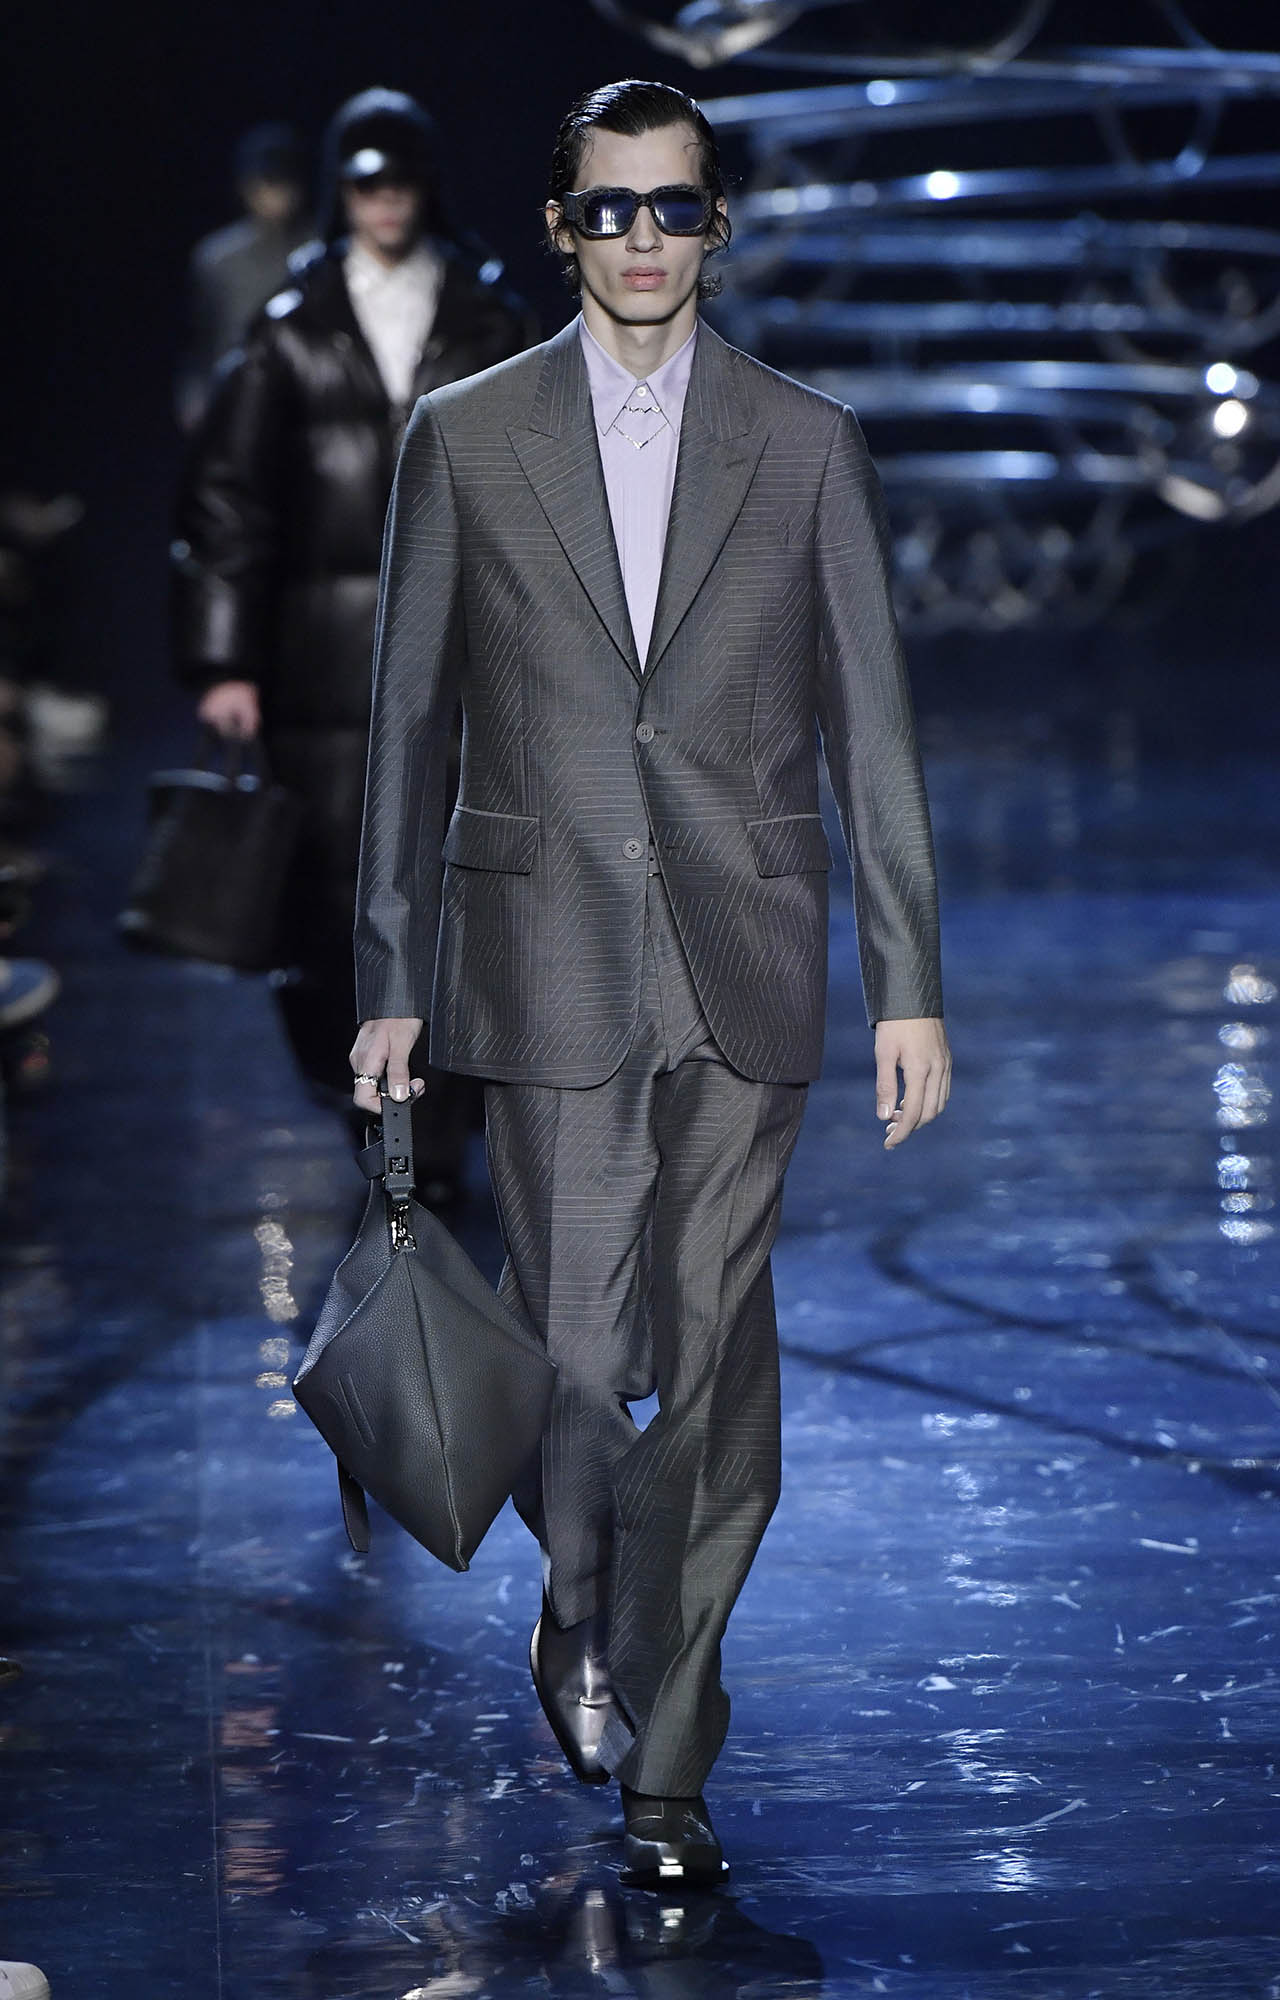 A model, sunglasses detail, walks the runway at the Fendi fashion